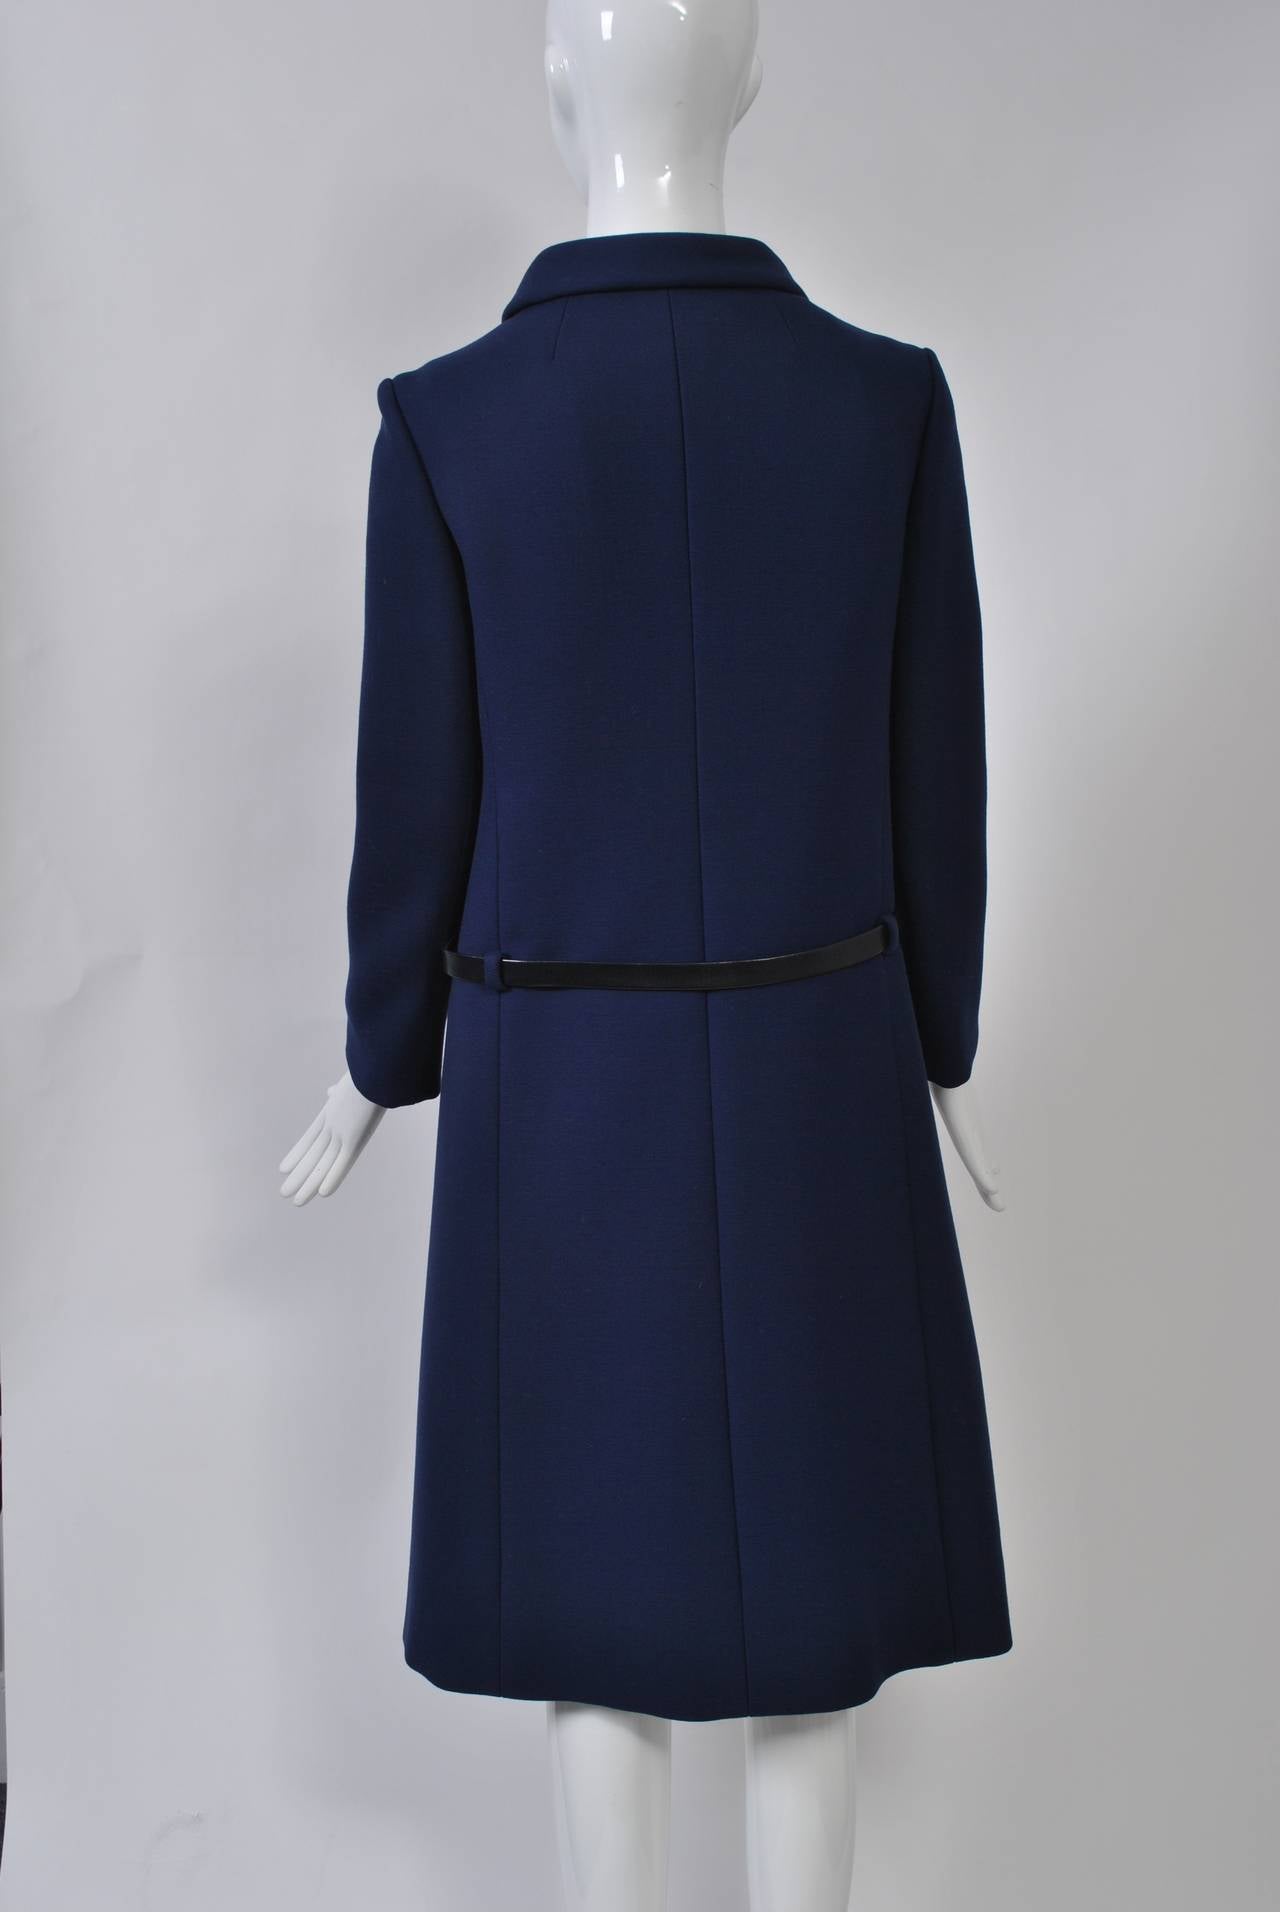 Originala 1960s Coat and Dress 1